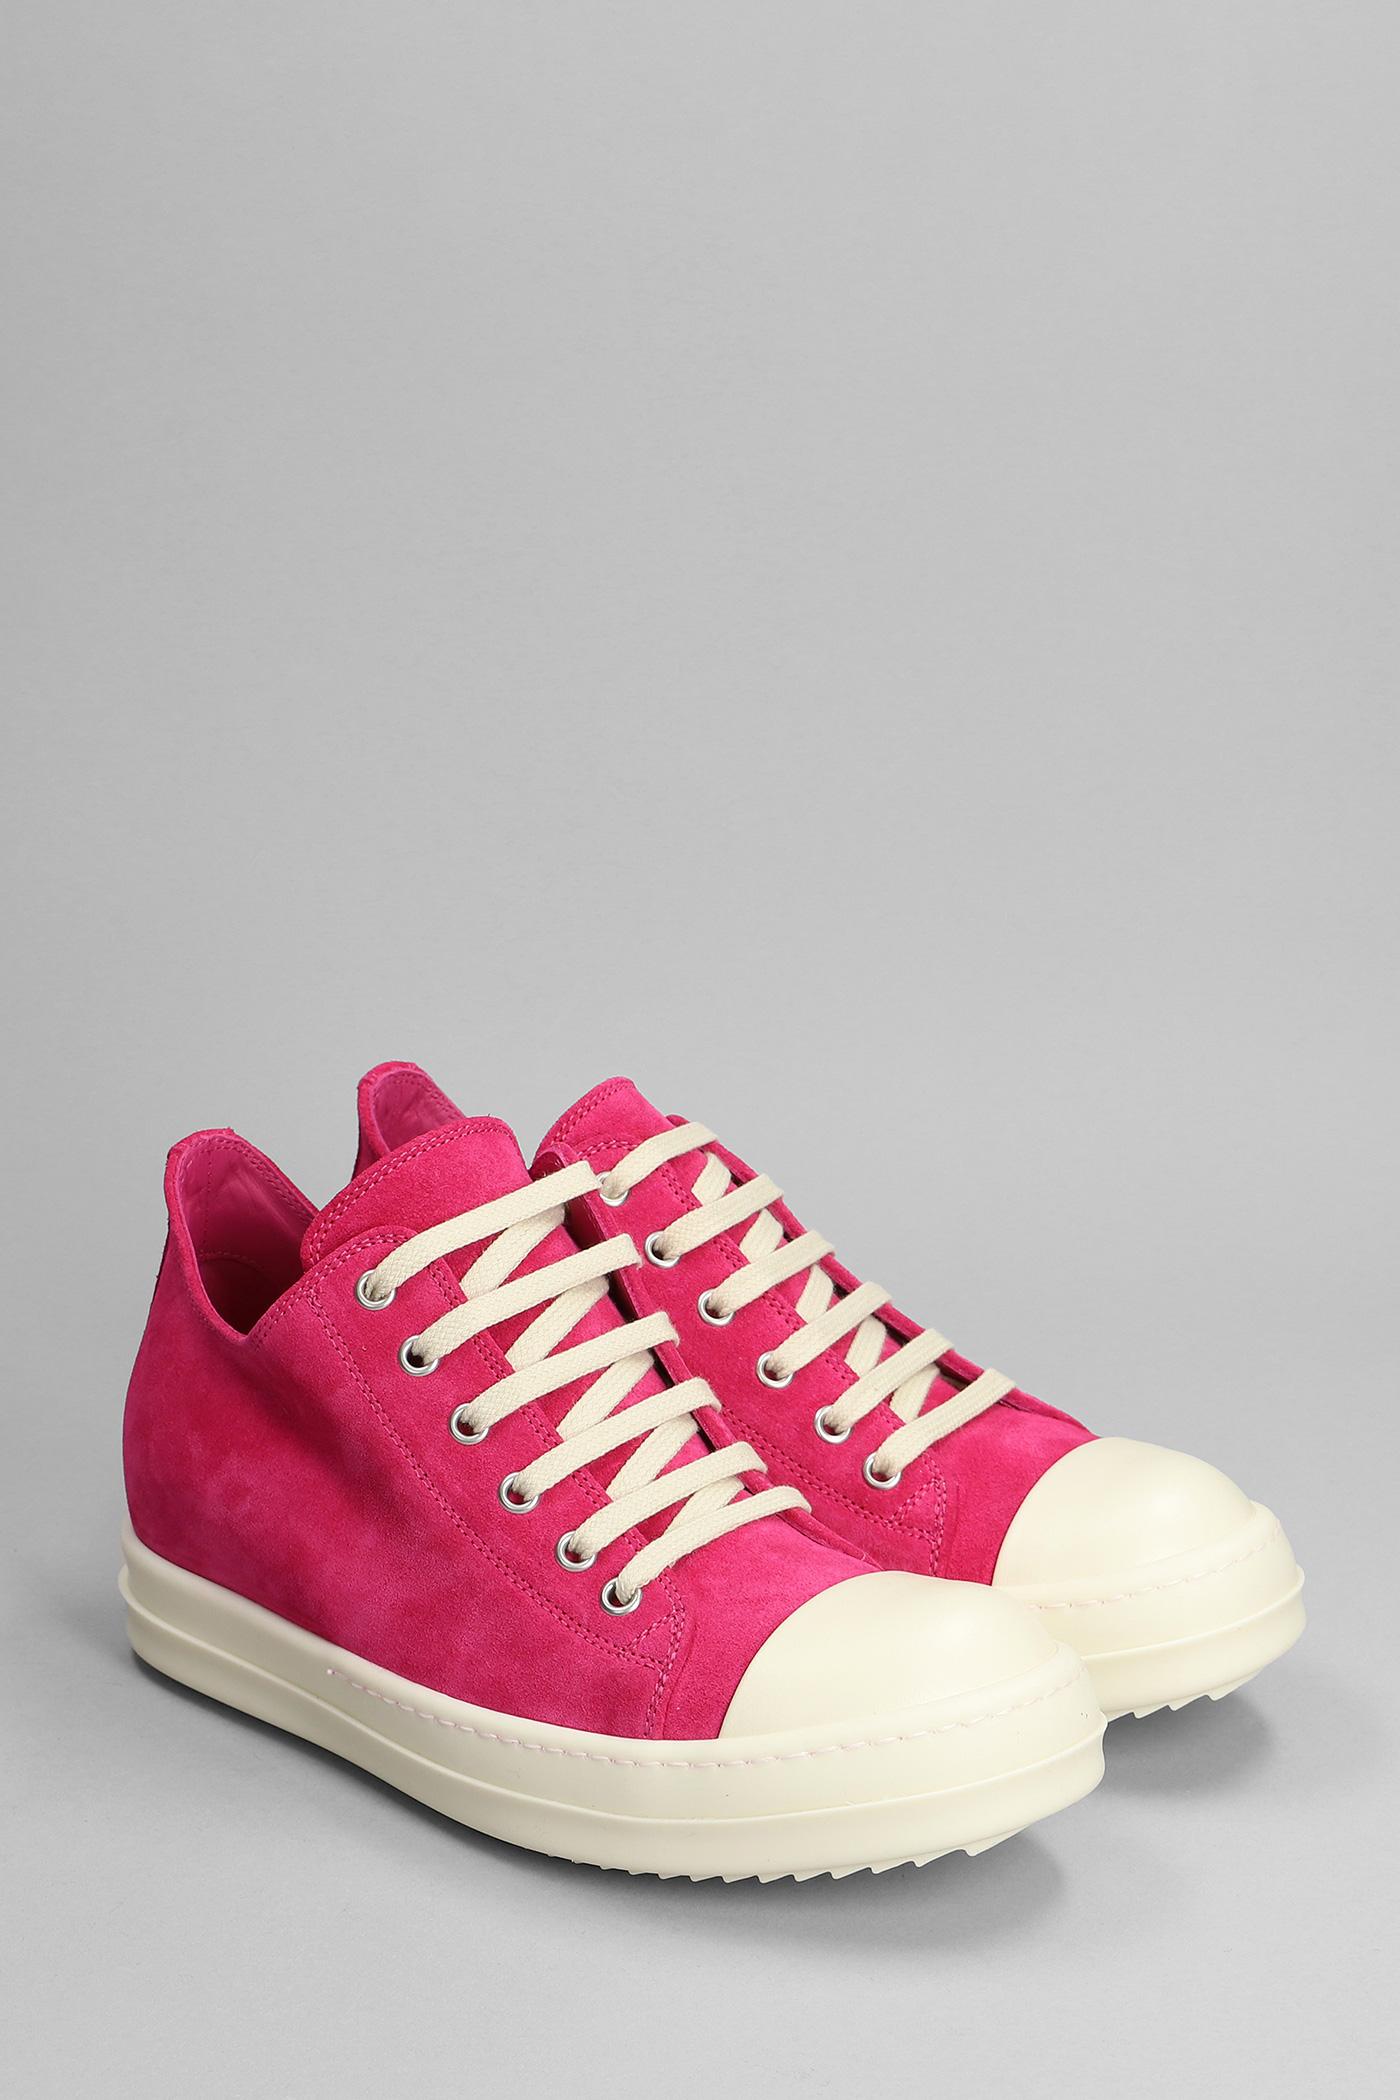 Rick Owens Low Sneaks Sneakers In Rose-pink Leather | Lyst